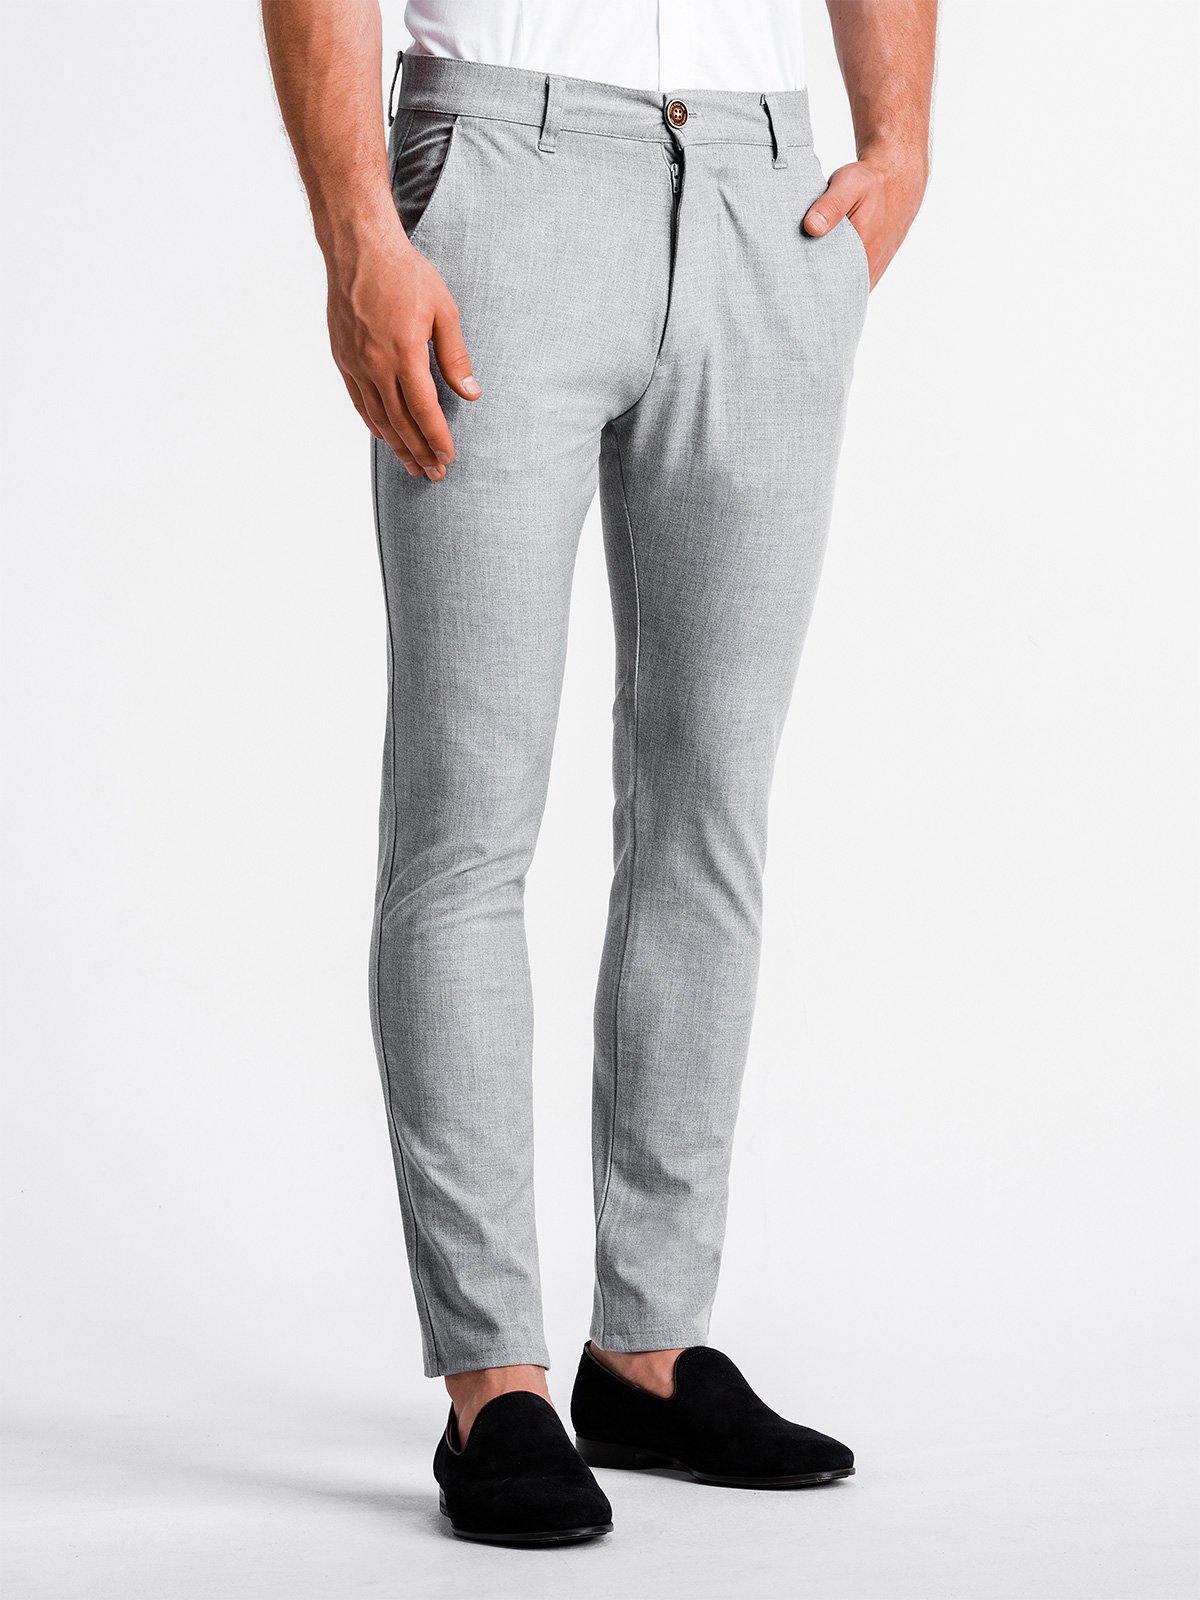 Men's pants chinos P832 - light grey | MODONE wholesale - Clothing For Men